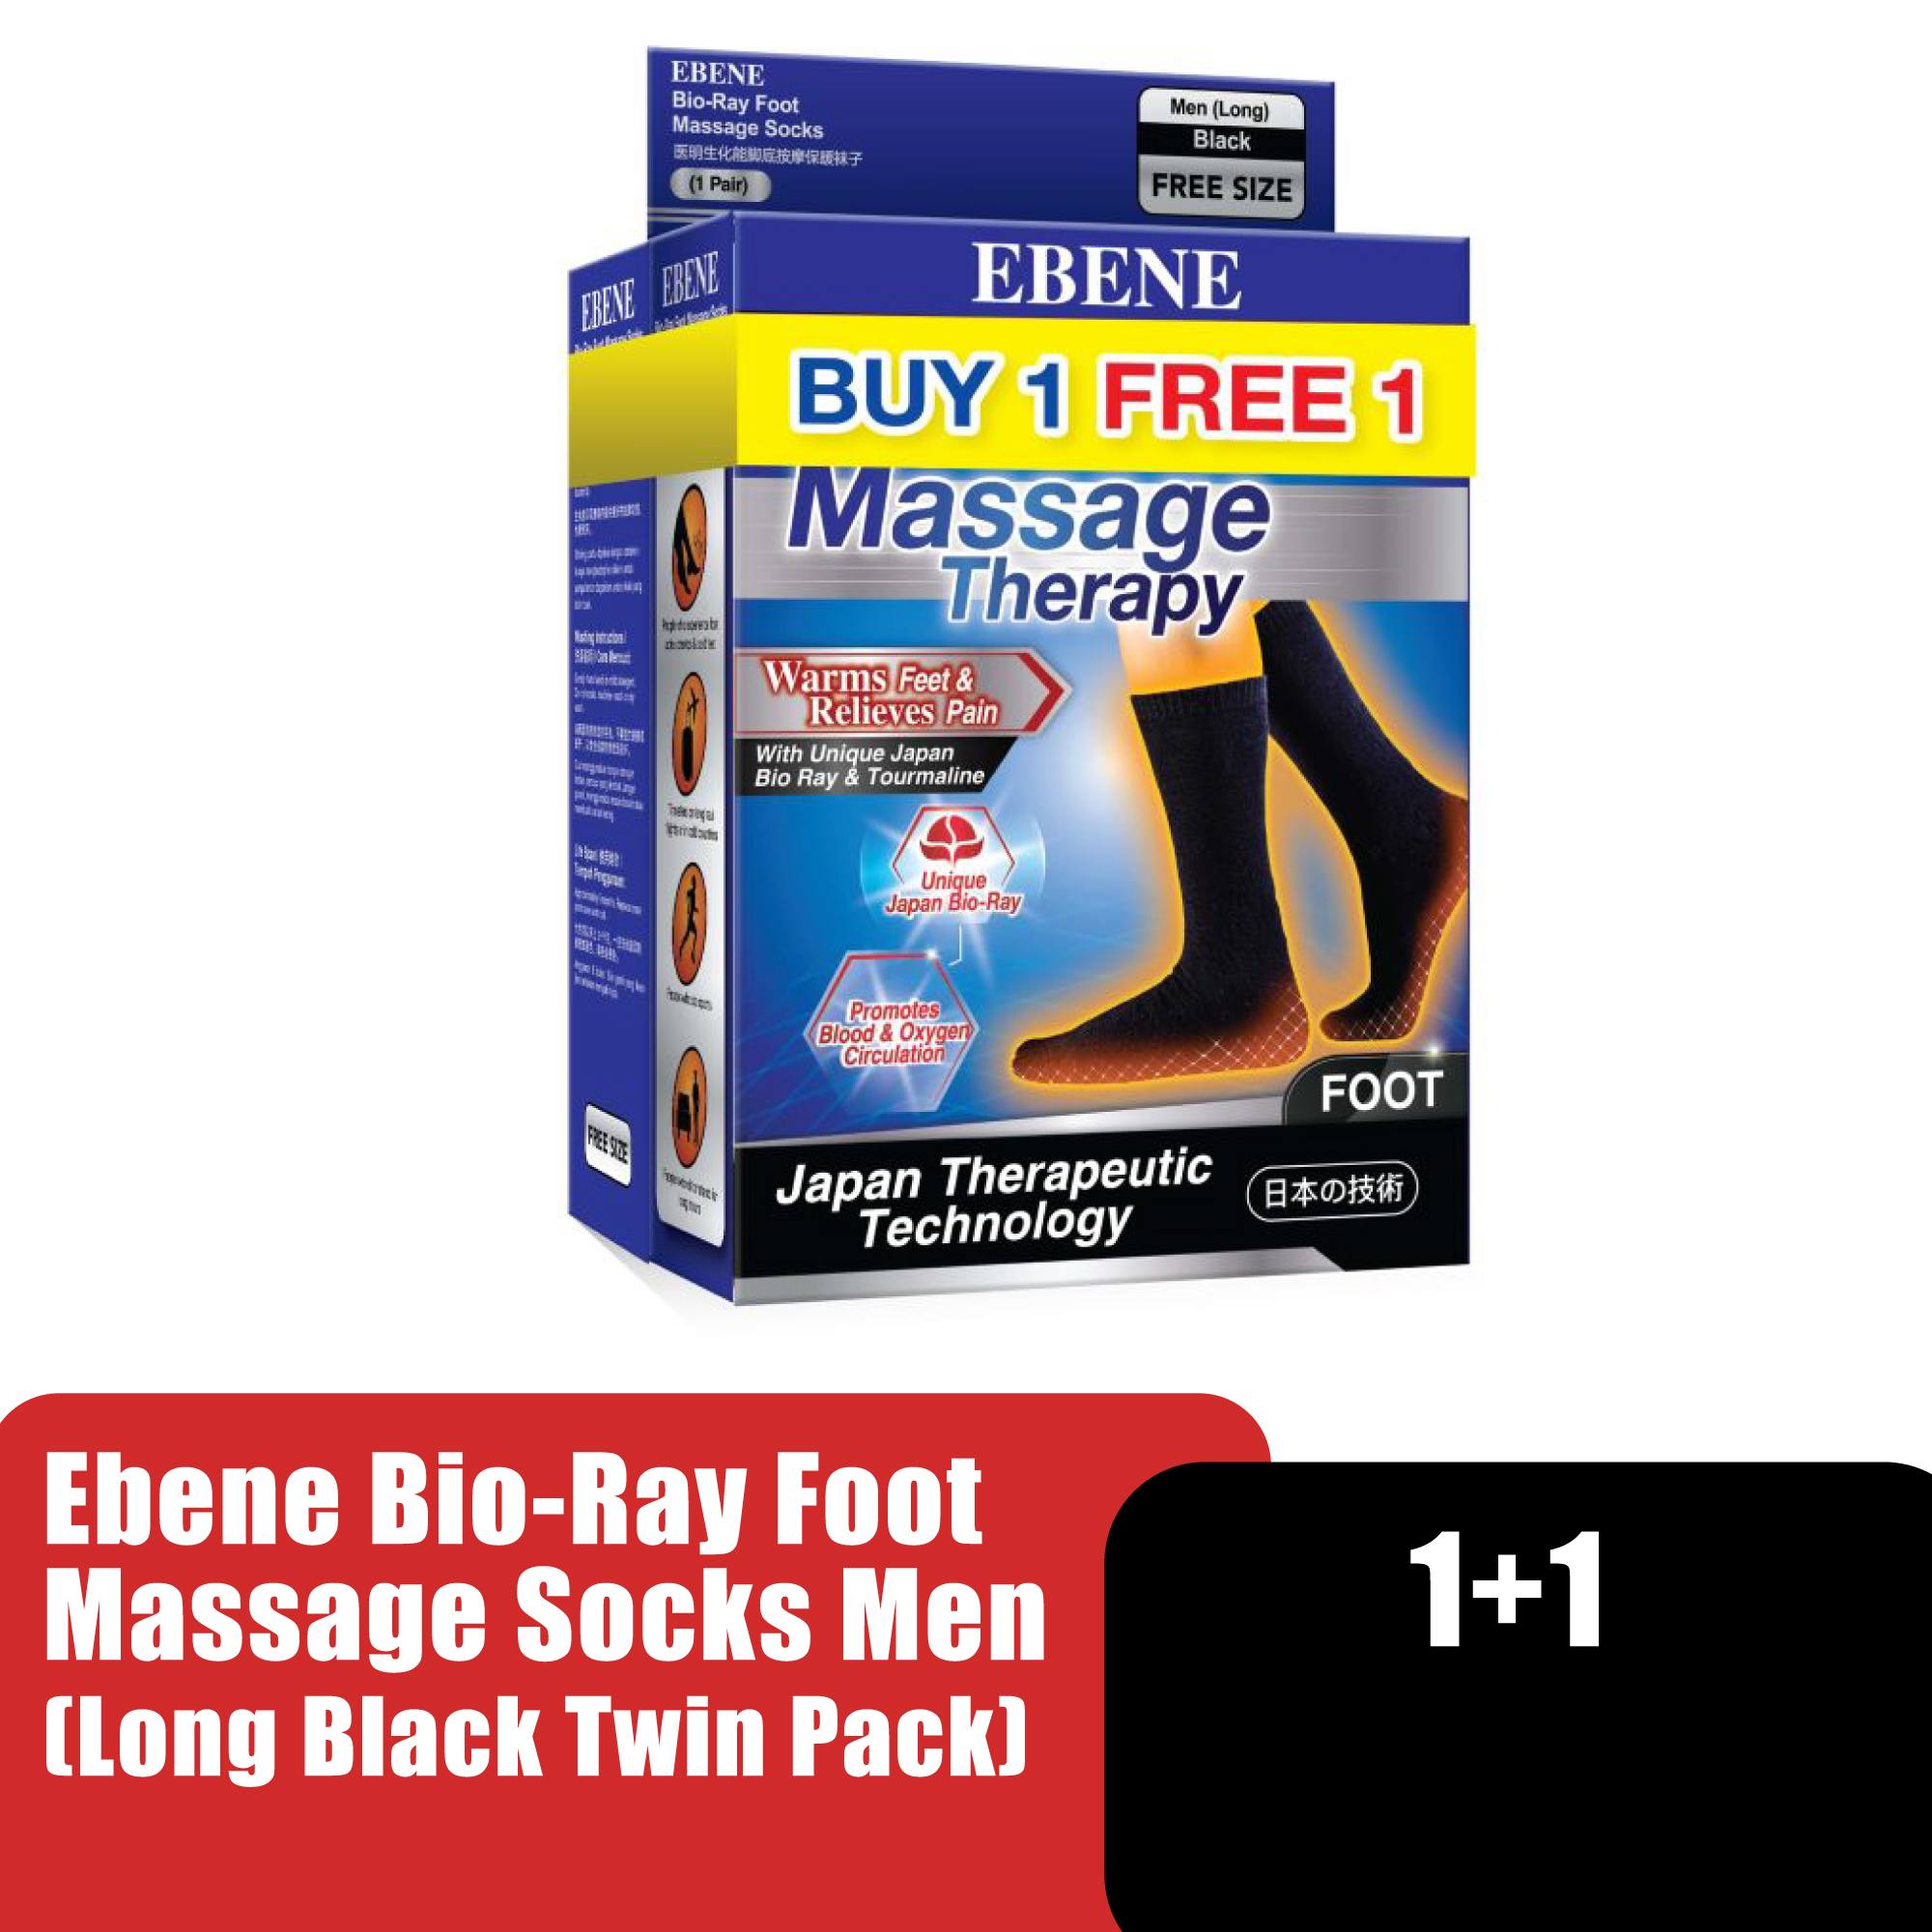 Ebene Bio-Ray Foot Massage Socks Men - Long Black Twin Pack (Free Size)